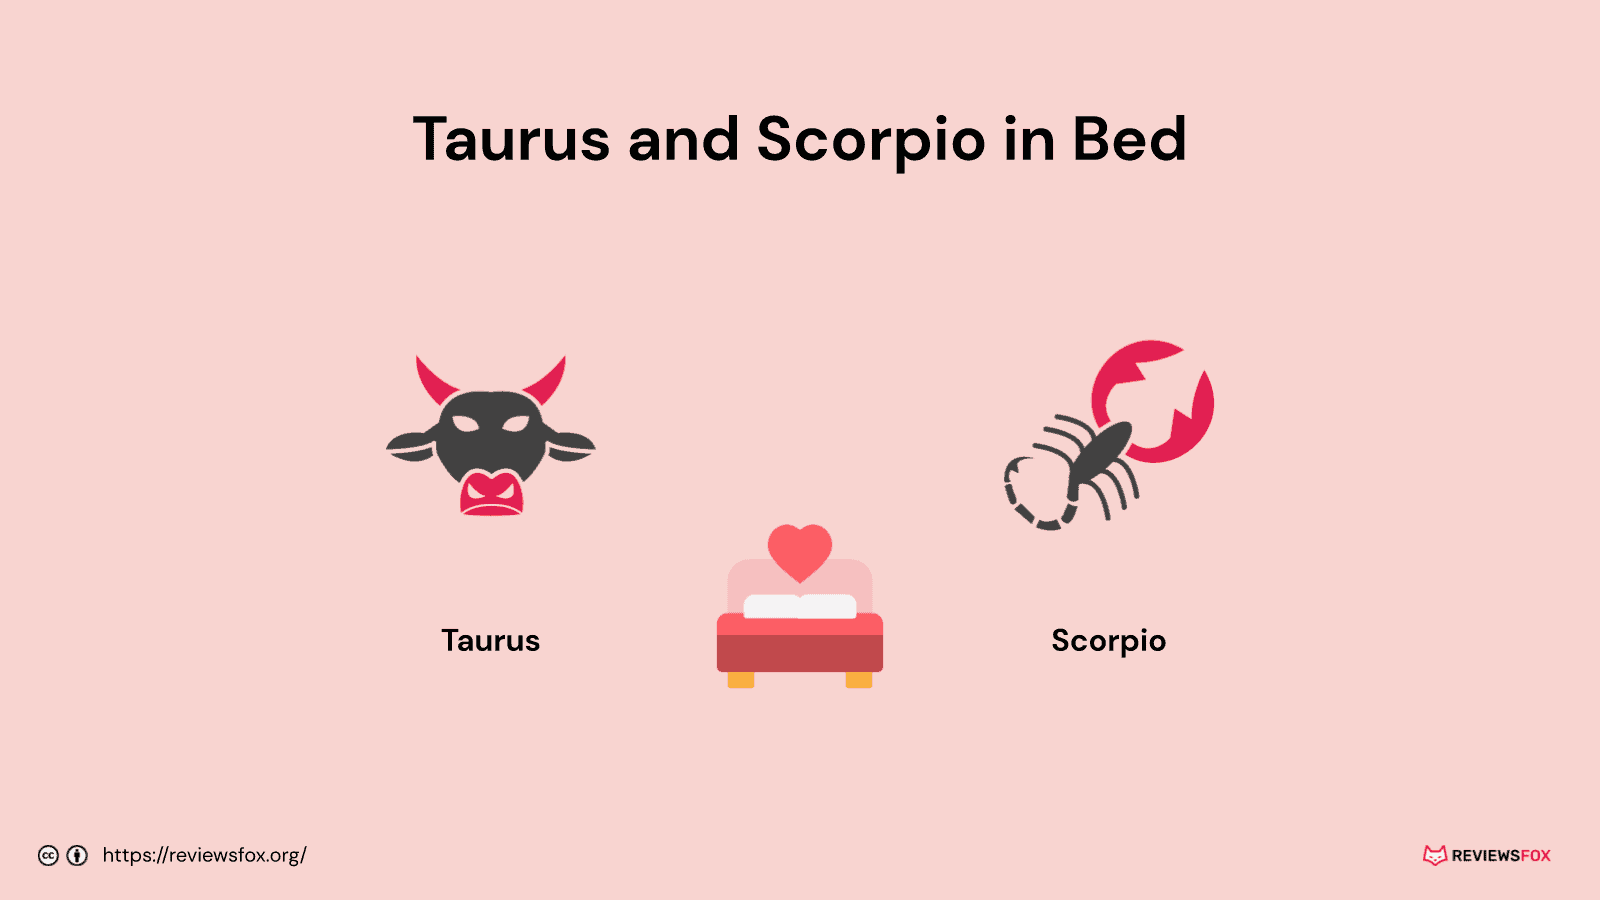 Taurus and Scorpio in bed